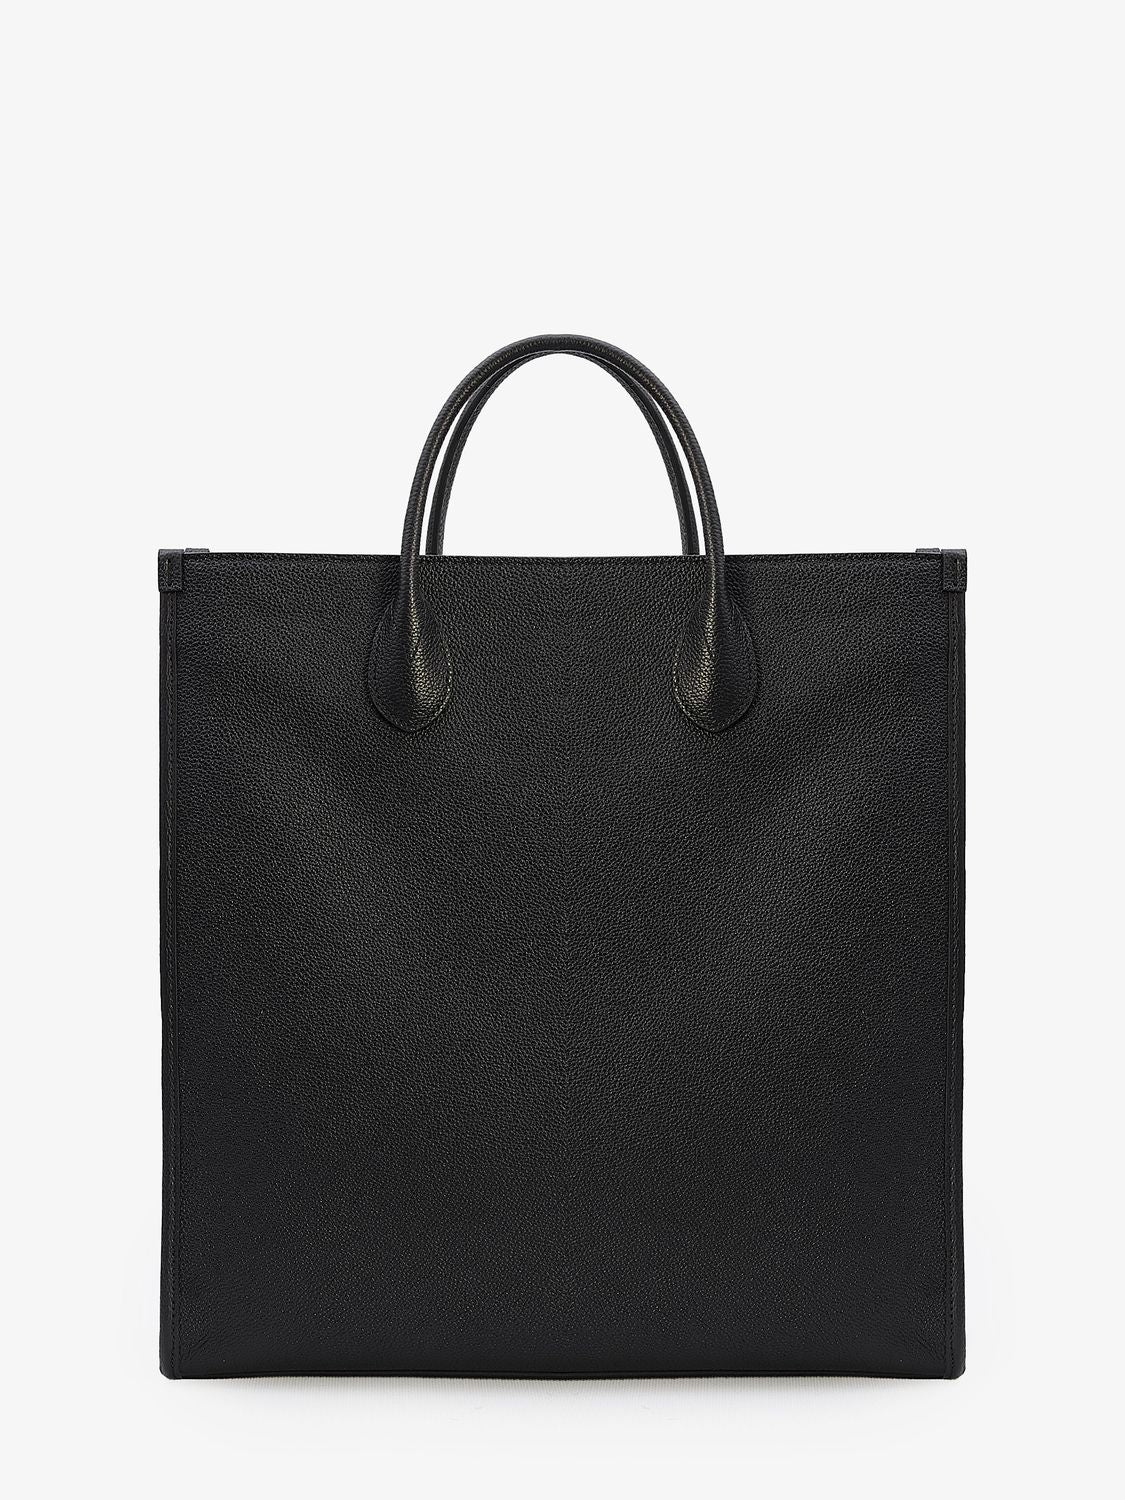 GUCCI Men's Black Leather Shopping Handbag with GG Supreme Trim